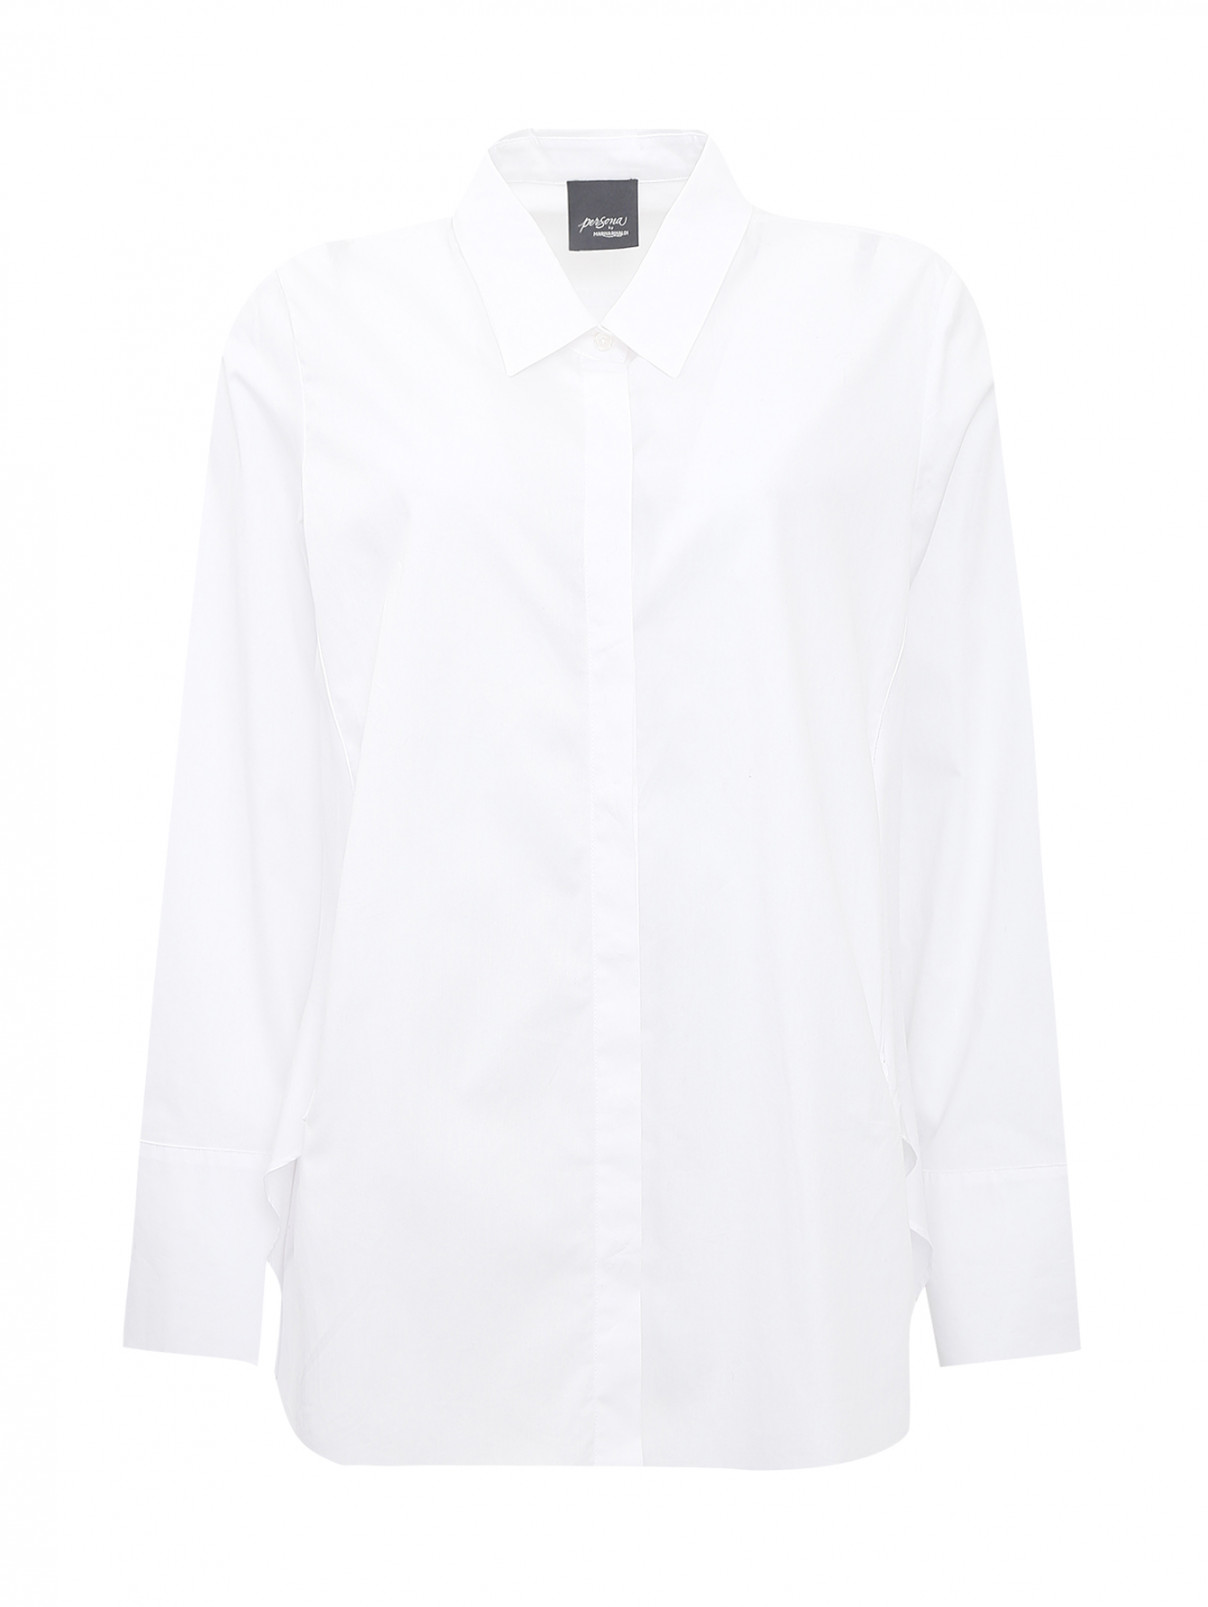 Блуза из хлопка Persona by Marina Rinaldi  –  Общий вид  – Цвет:  Белый